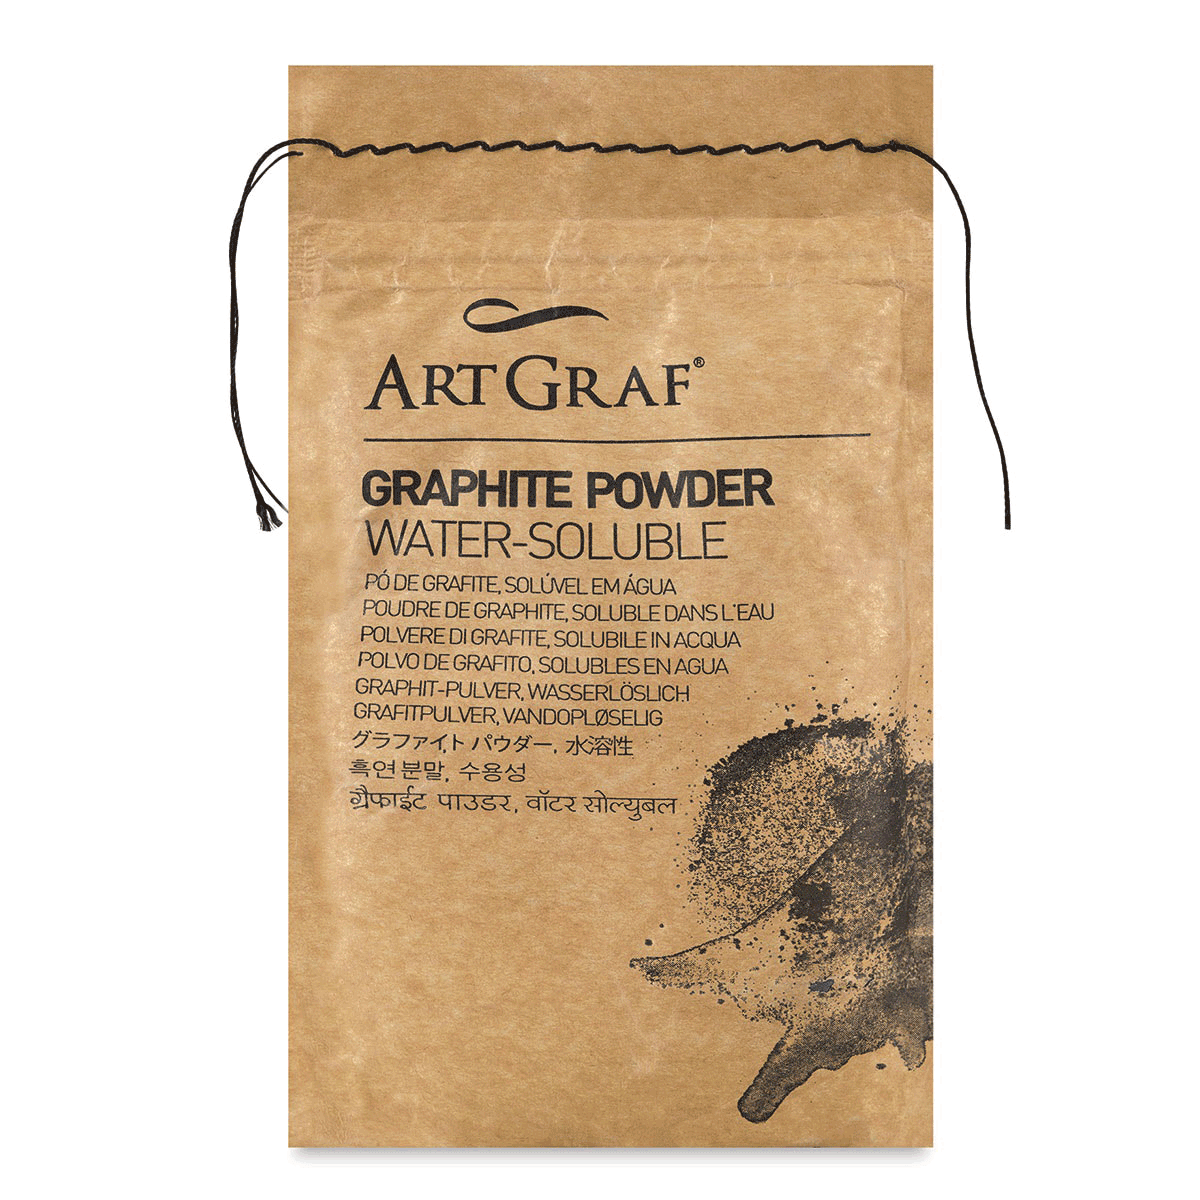 ArtGraf Water Soluble Graphite Powder 250g Bag, Gray